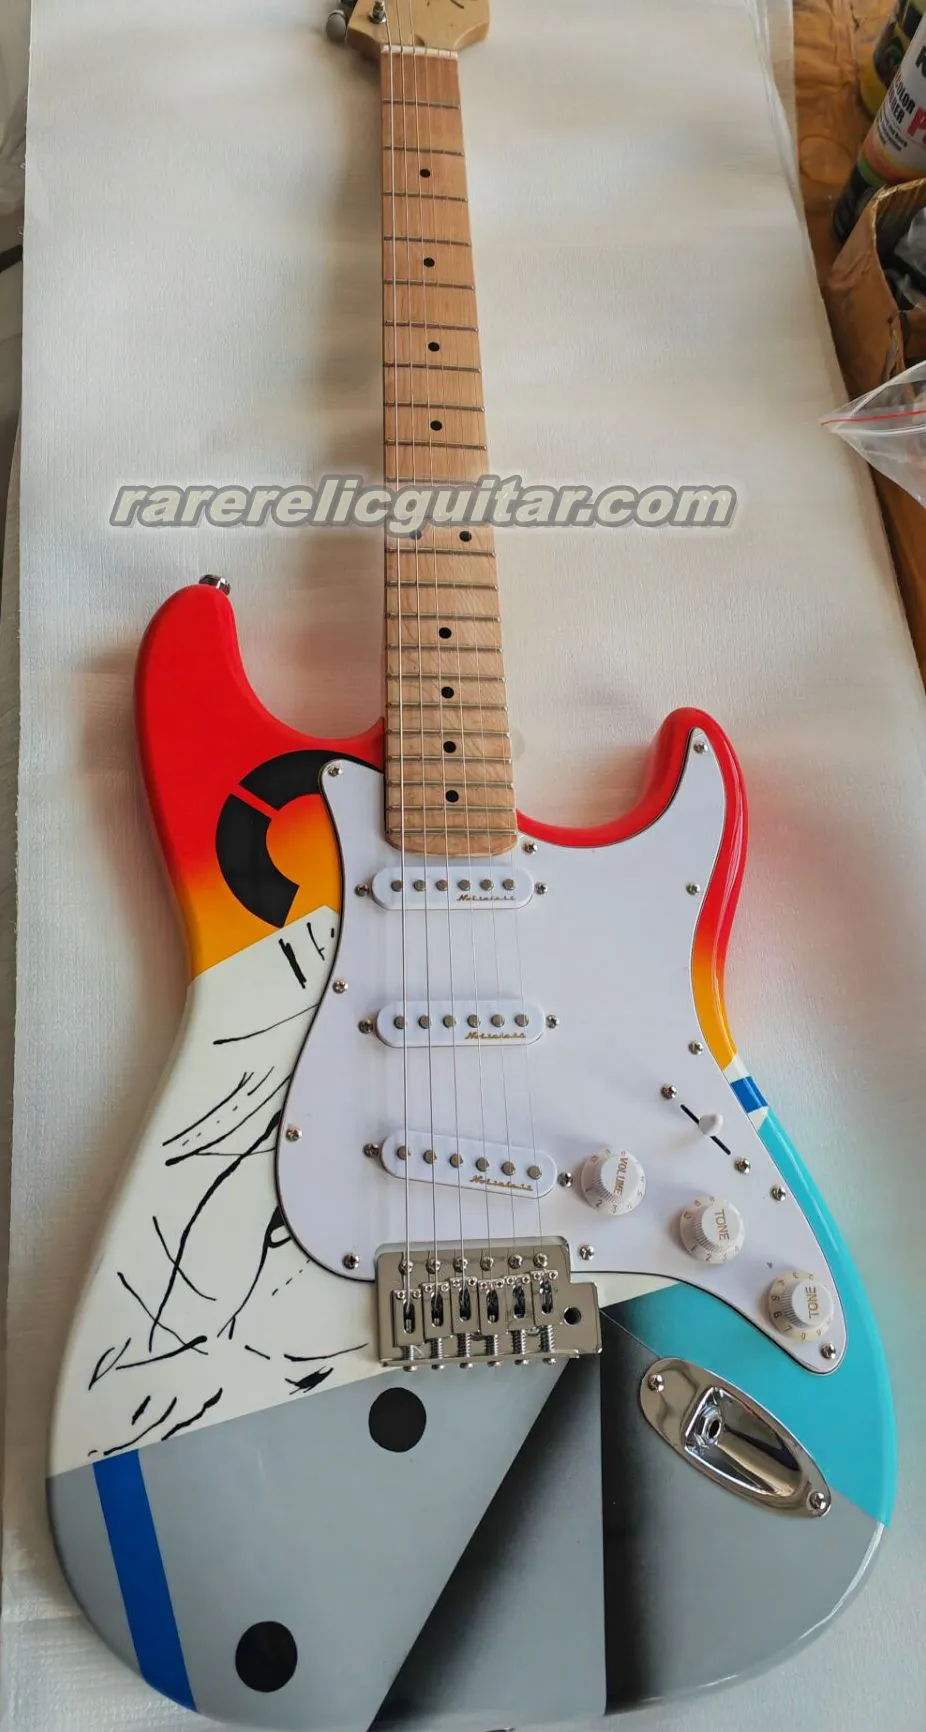 Em estoque Pintura de trabalho manual Eric Clapton Crash Rainbow Crashocaster Over The Rainbow Guitarra elétrica Vintage Tuners Tremolo Bridge Whammy Bar Chrome hardware